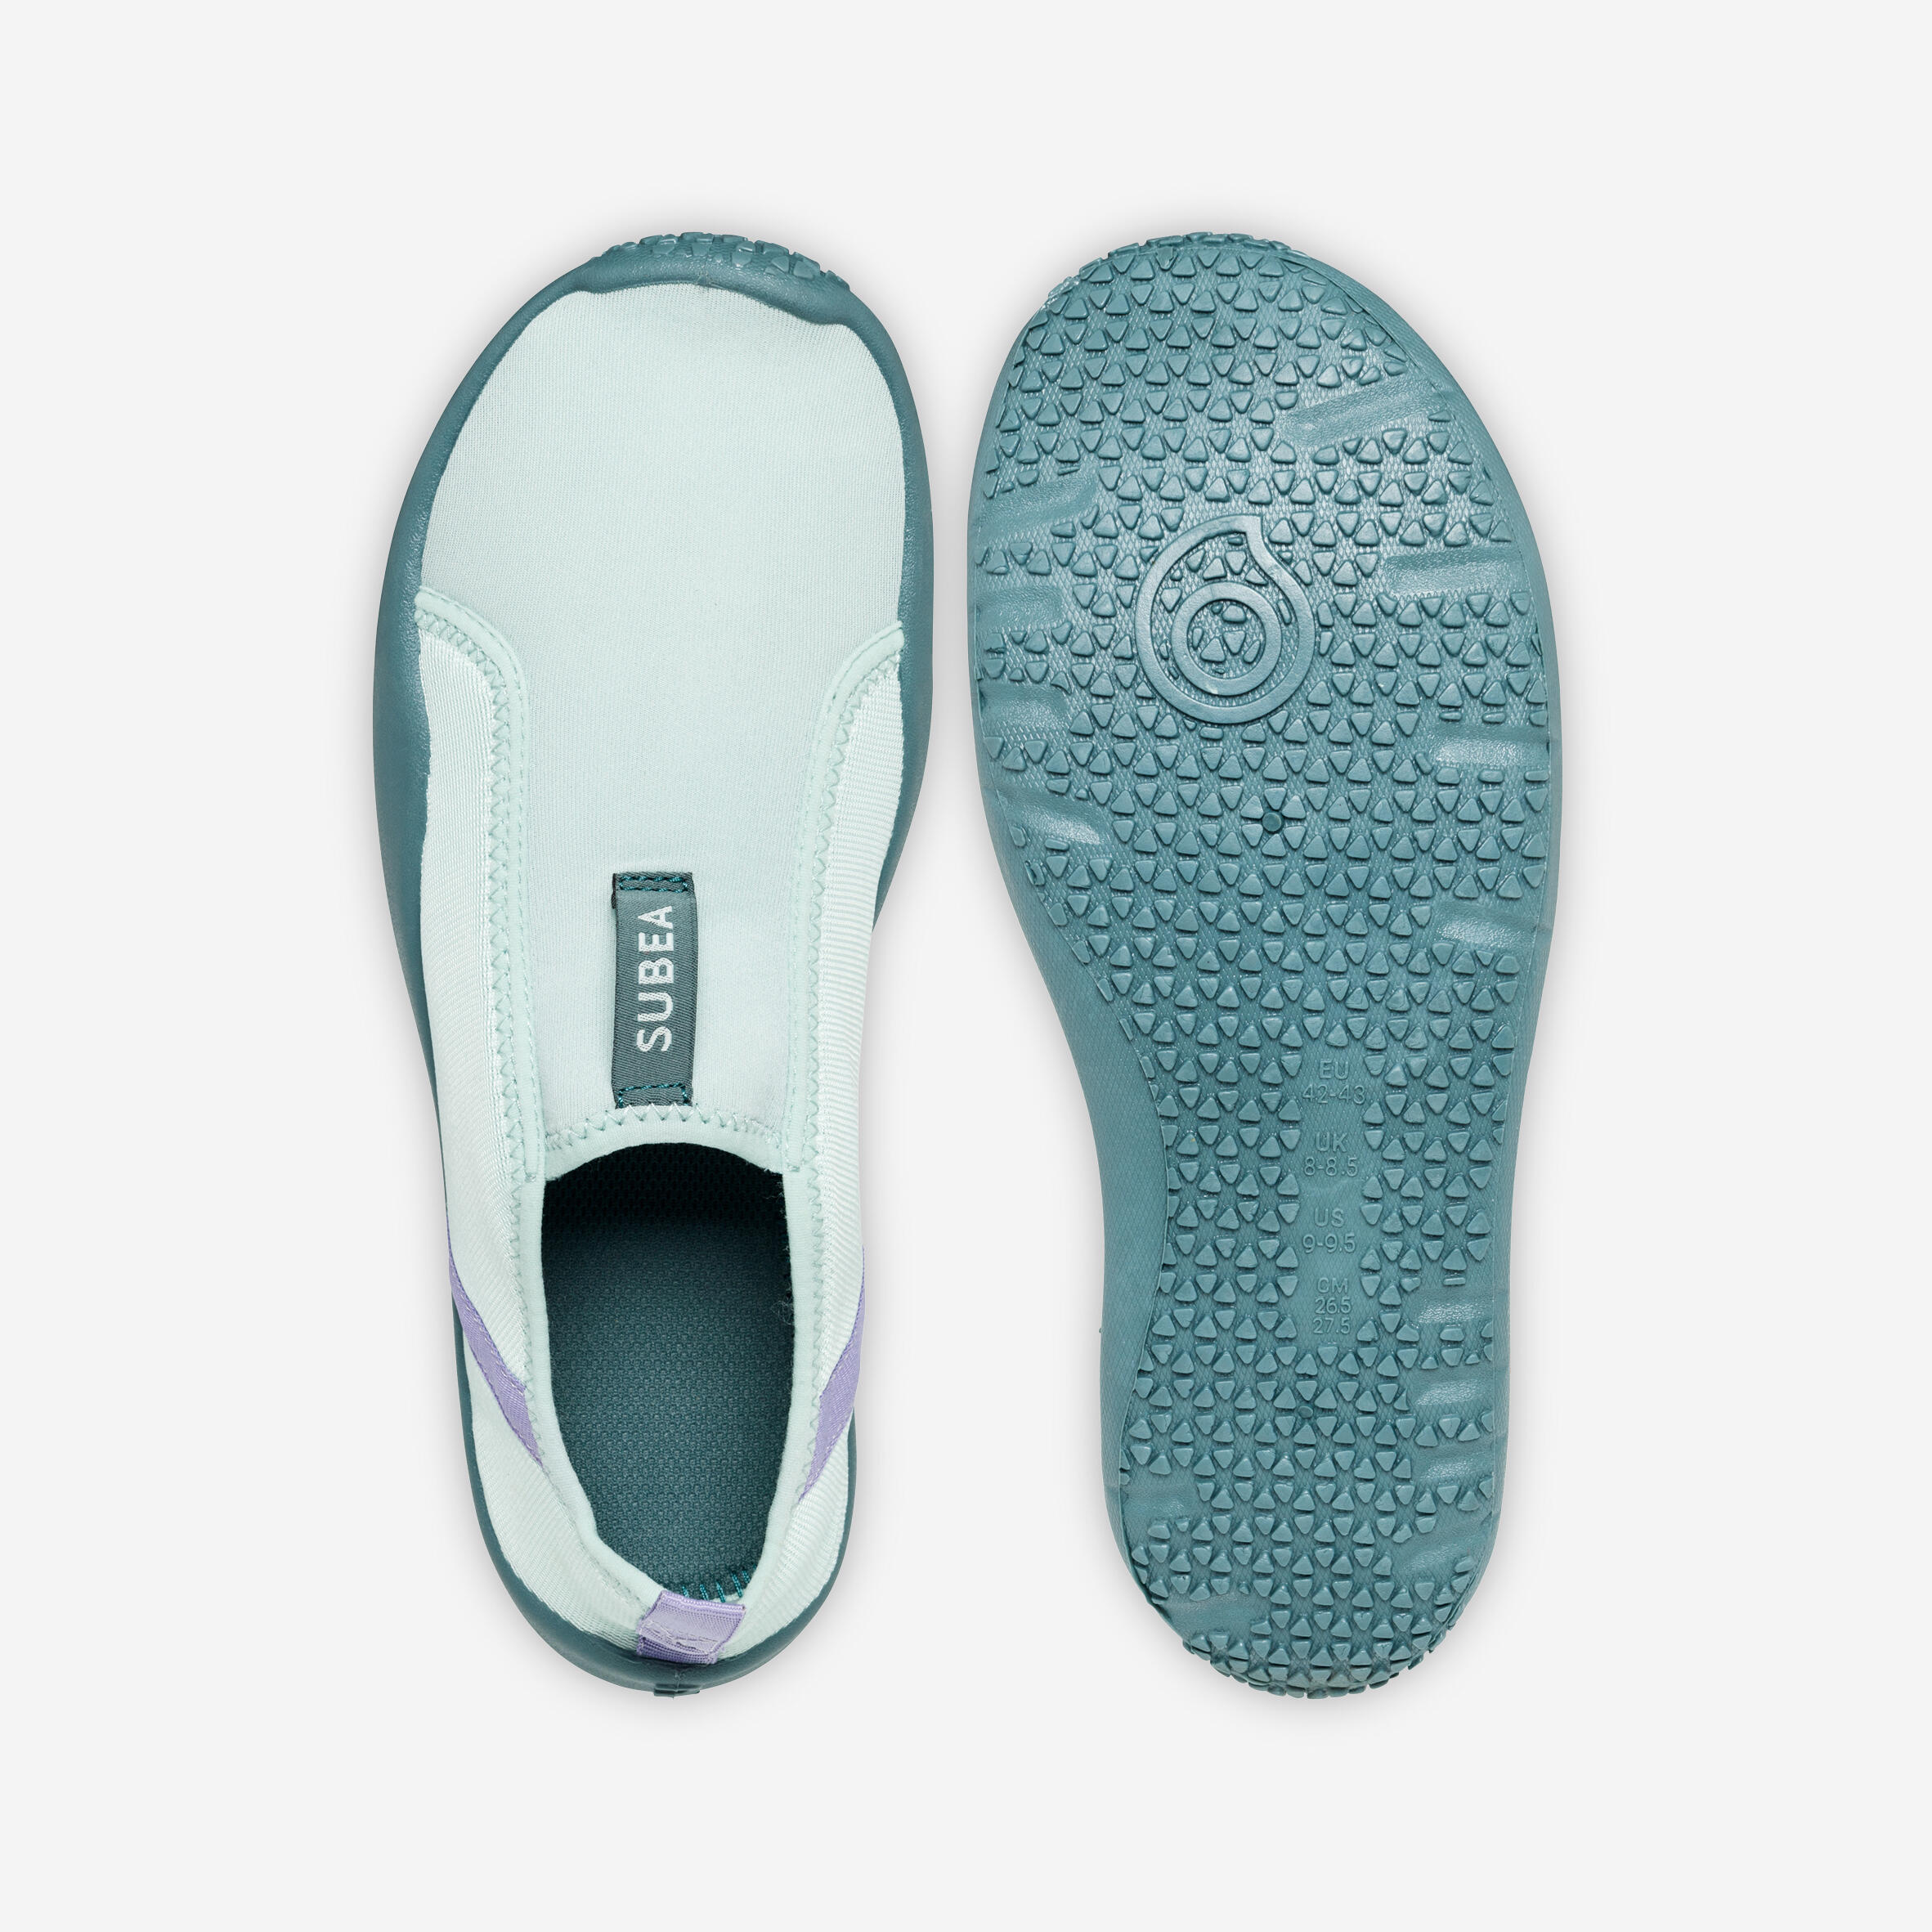 Adult's elasticated water shoes - Aquashoes 120 Eucalyptus 3/8